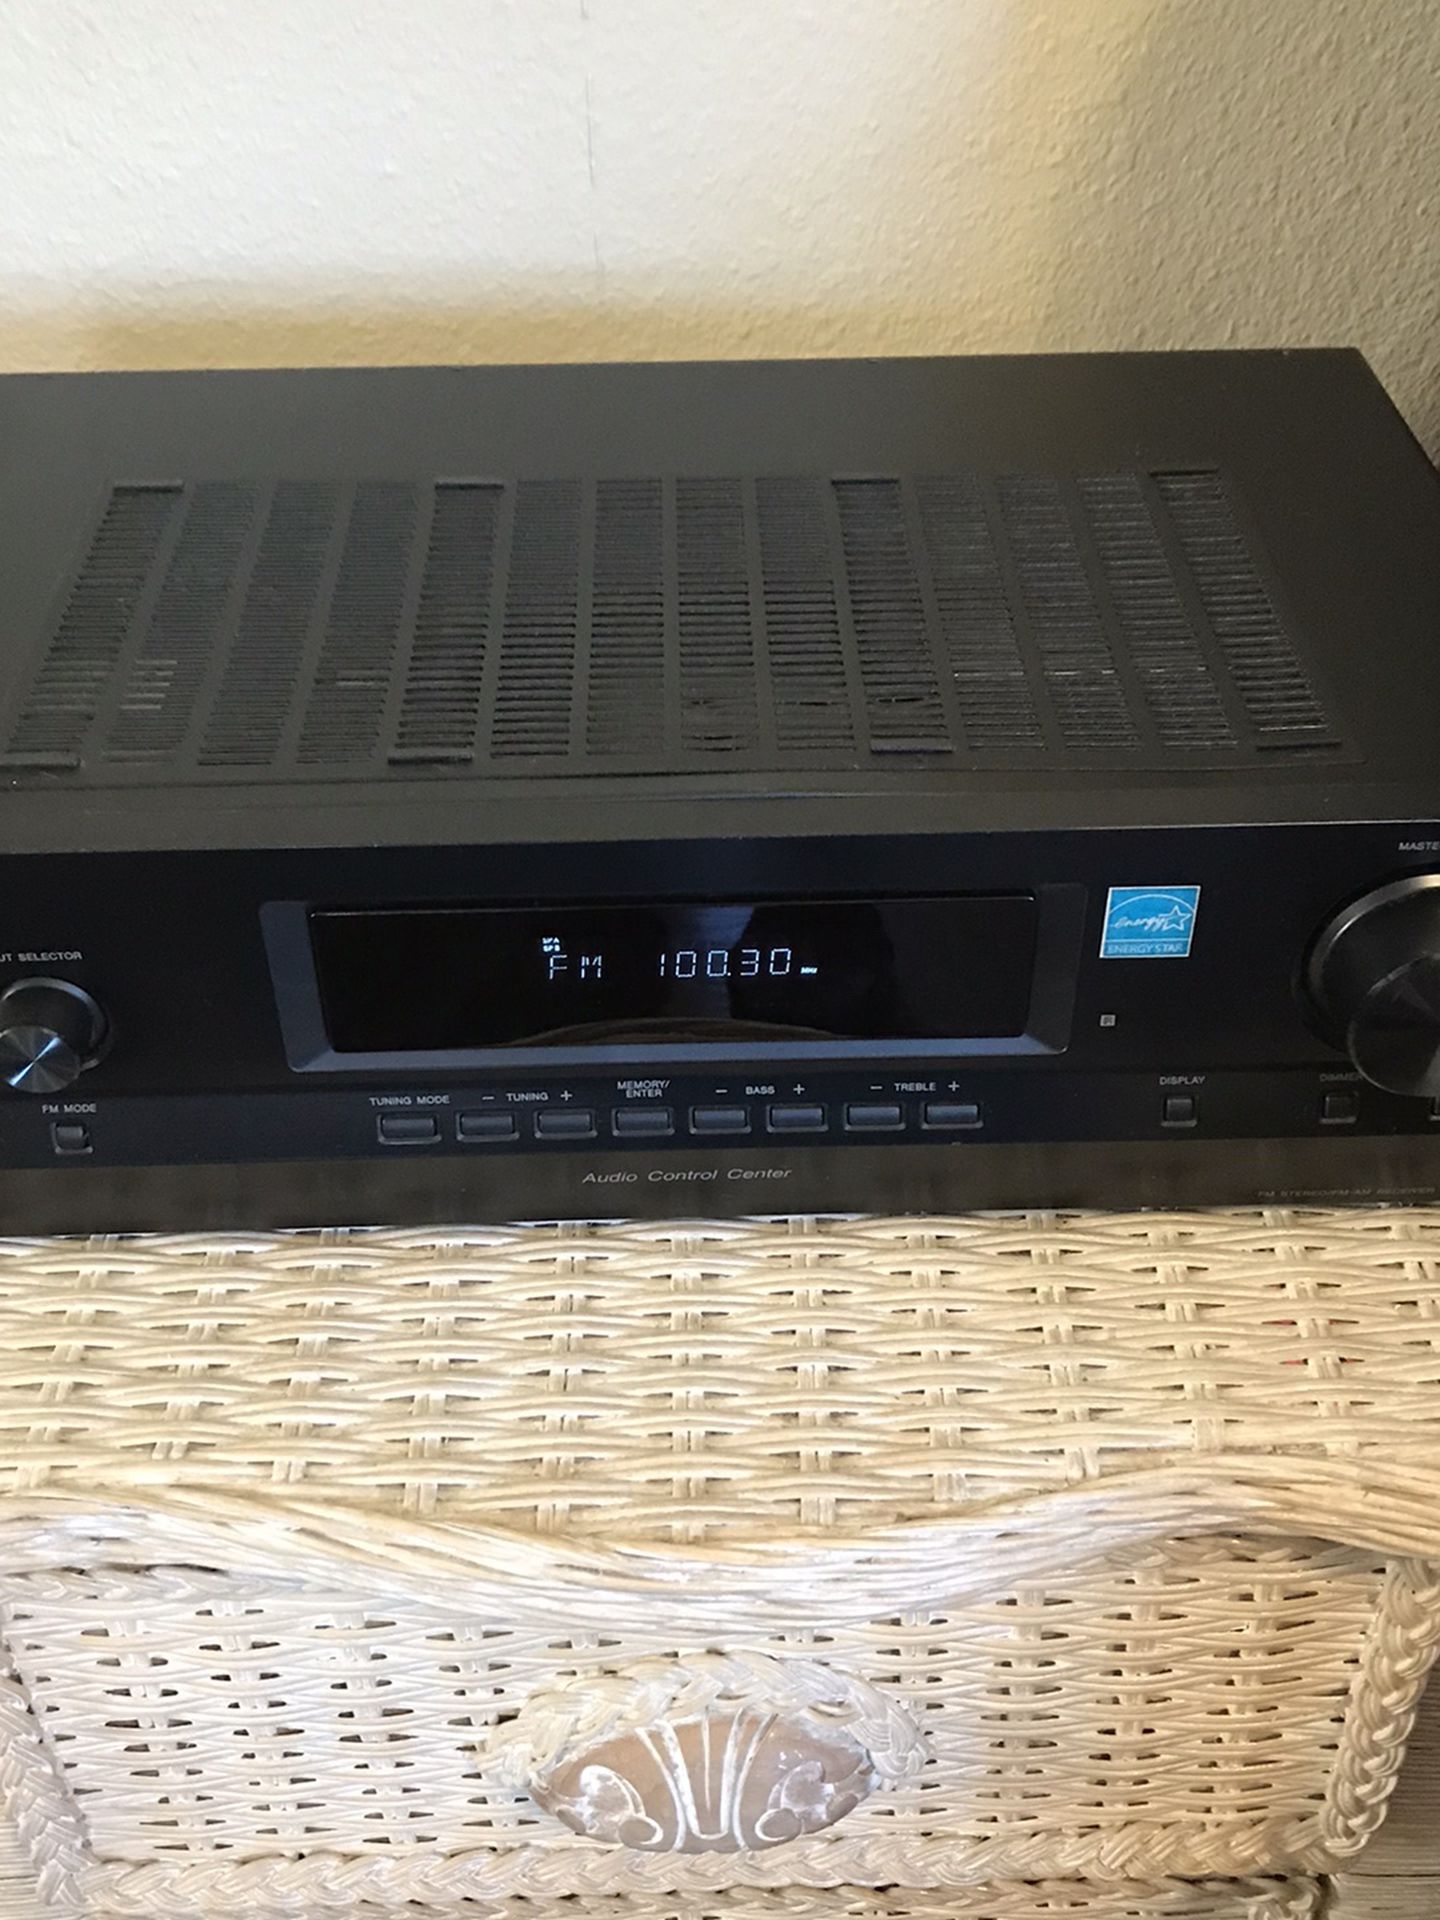 Sony STR-DH100 Stereo AM/FM Receiver